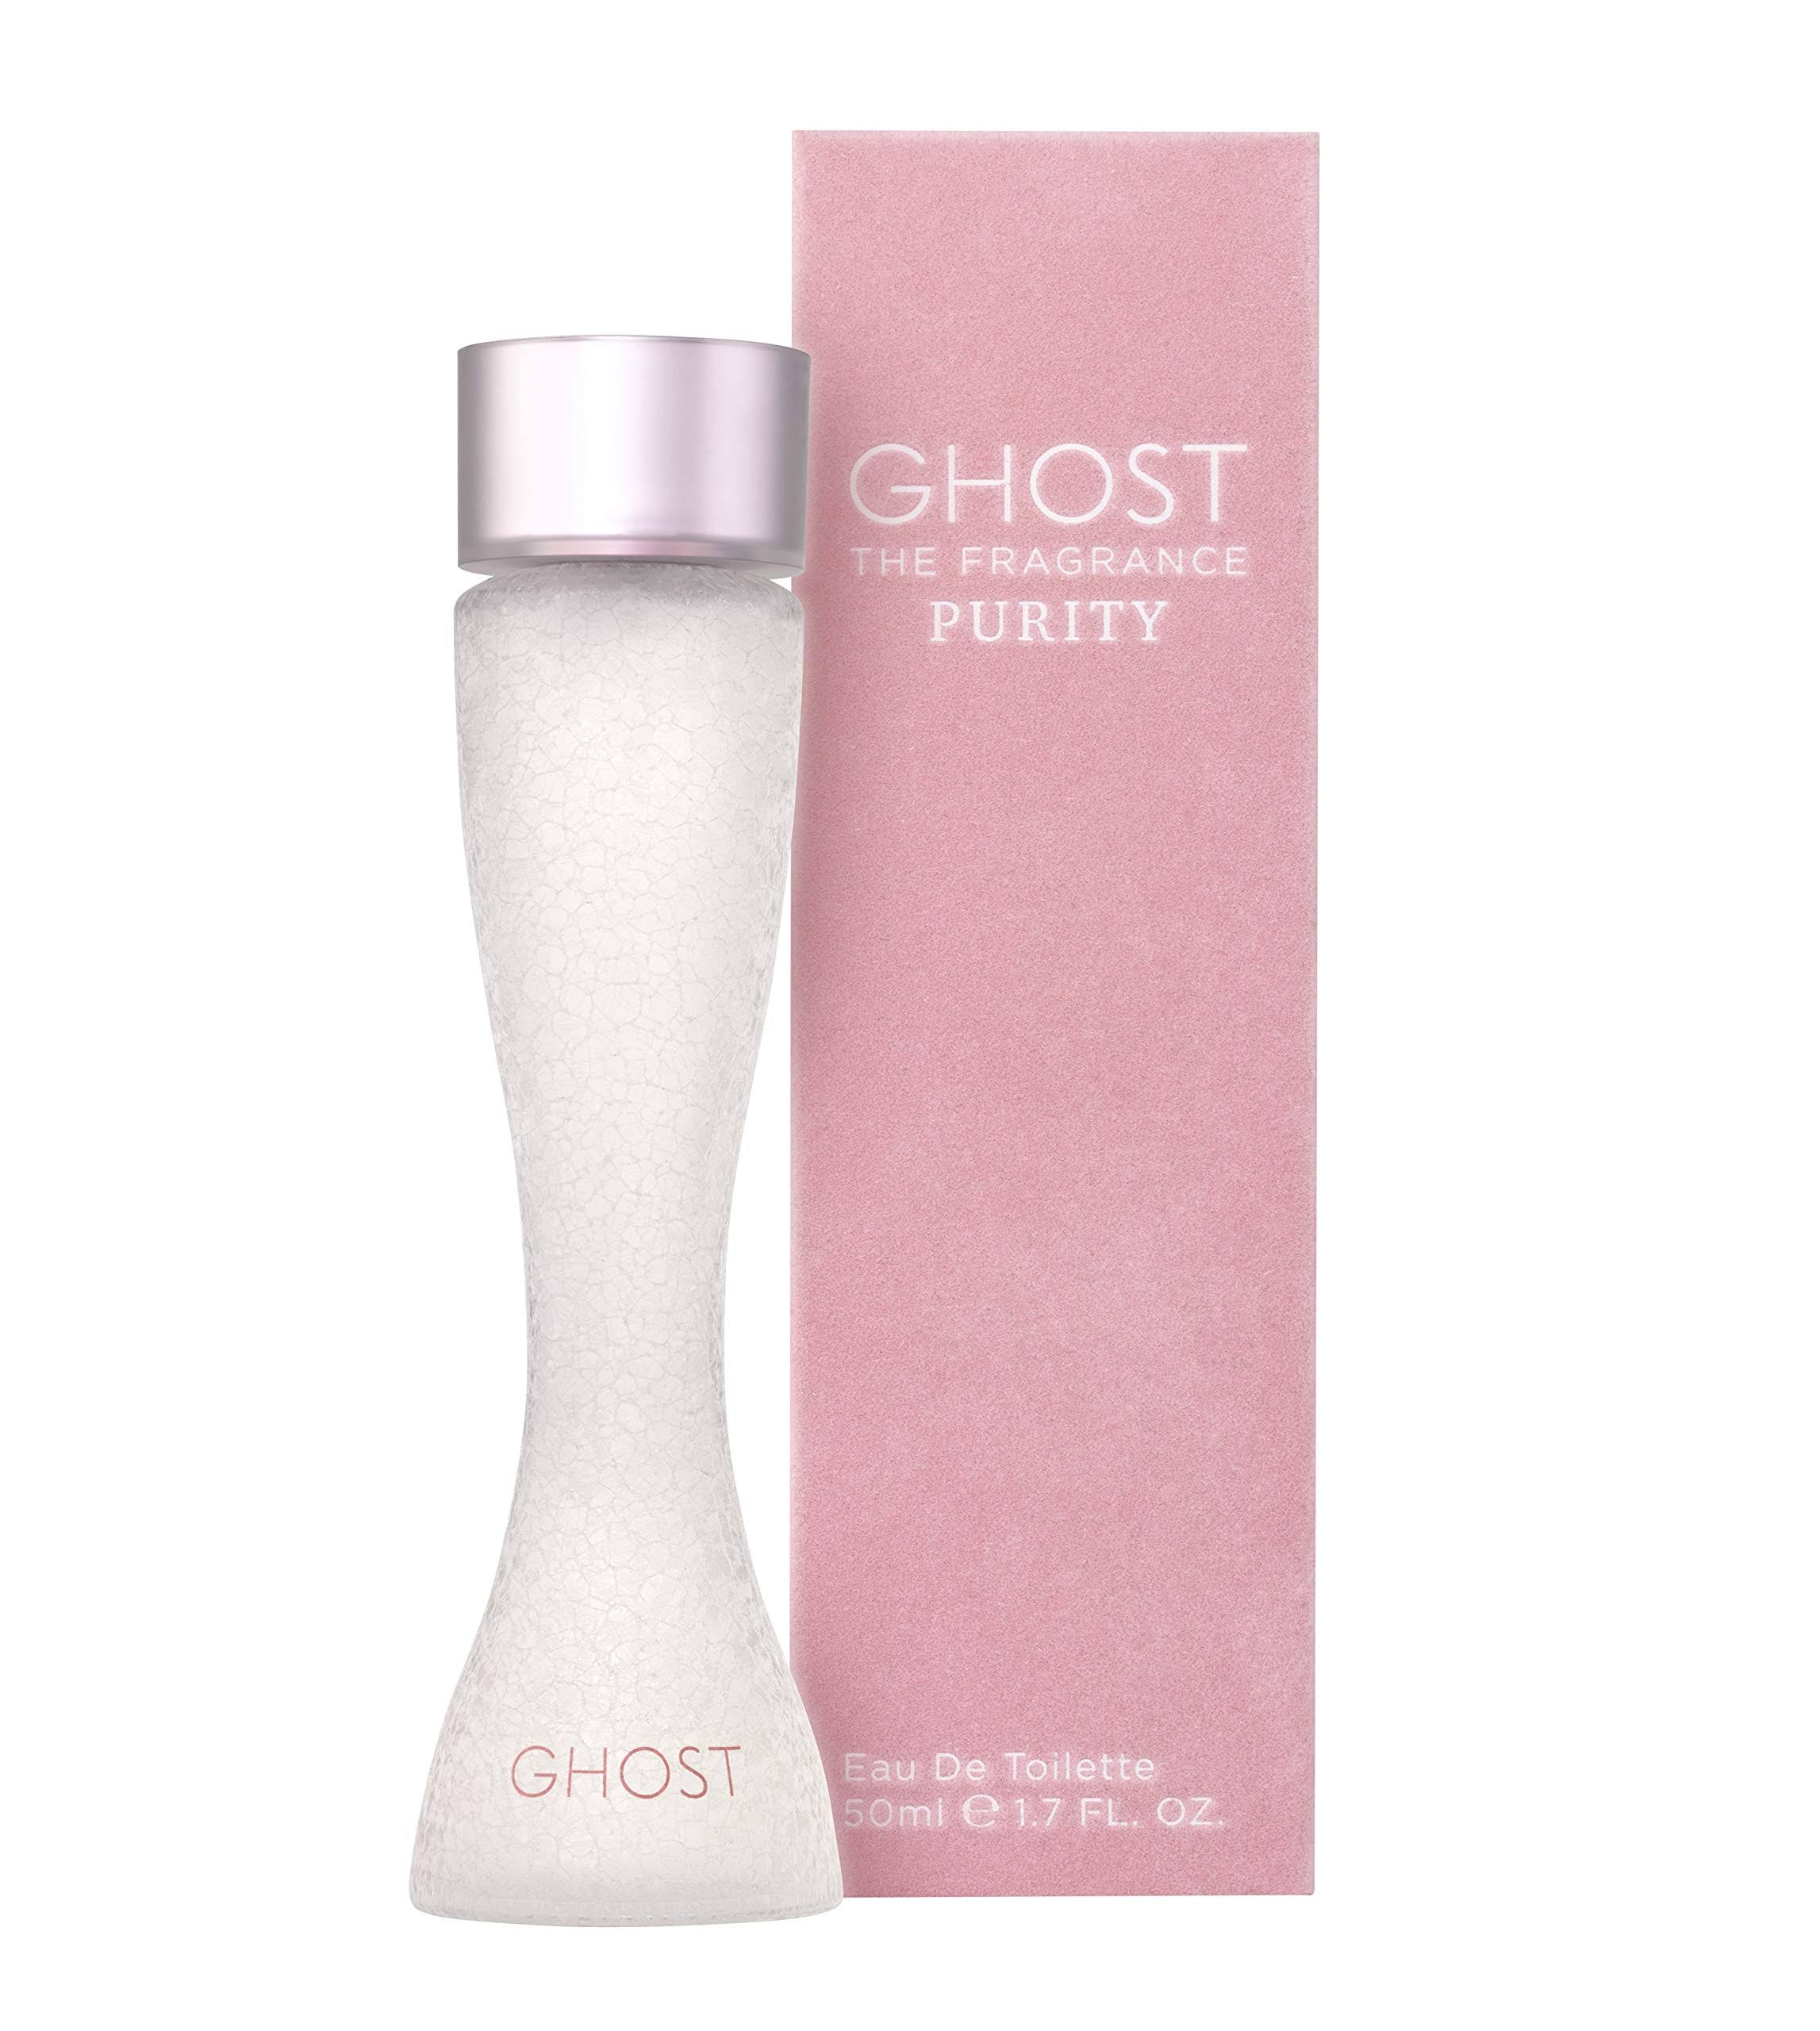 Ghost The Fragrance Purity 50ml Eau de Toilette Spray